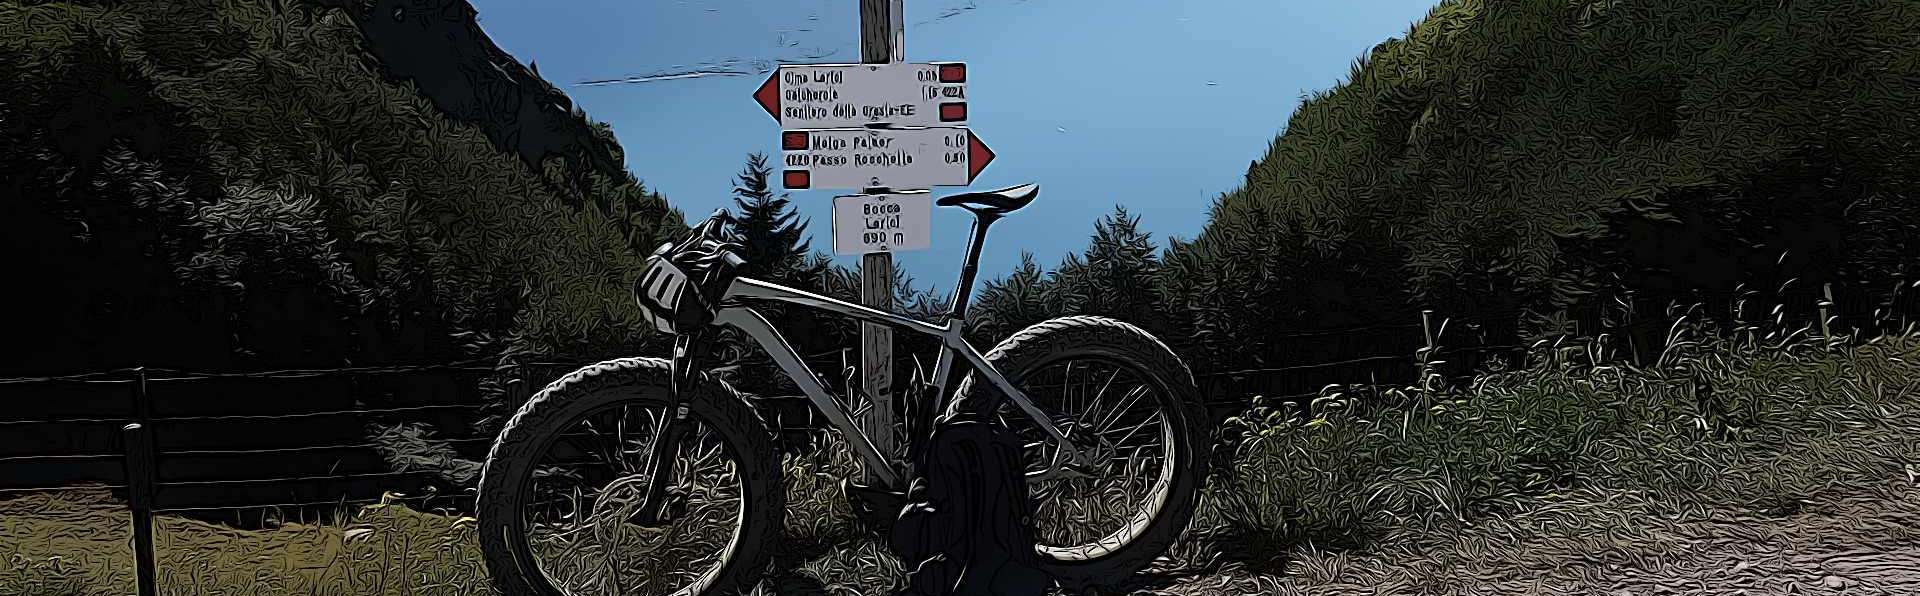 Cycling at Lake Garda - Bike Trails in Trentino